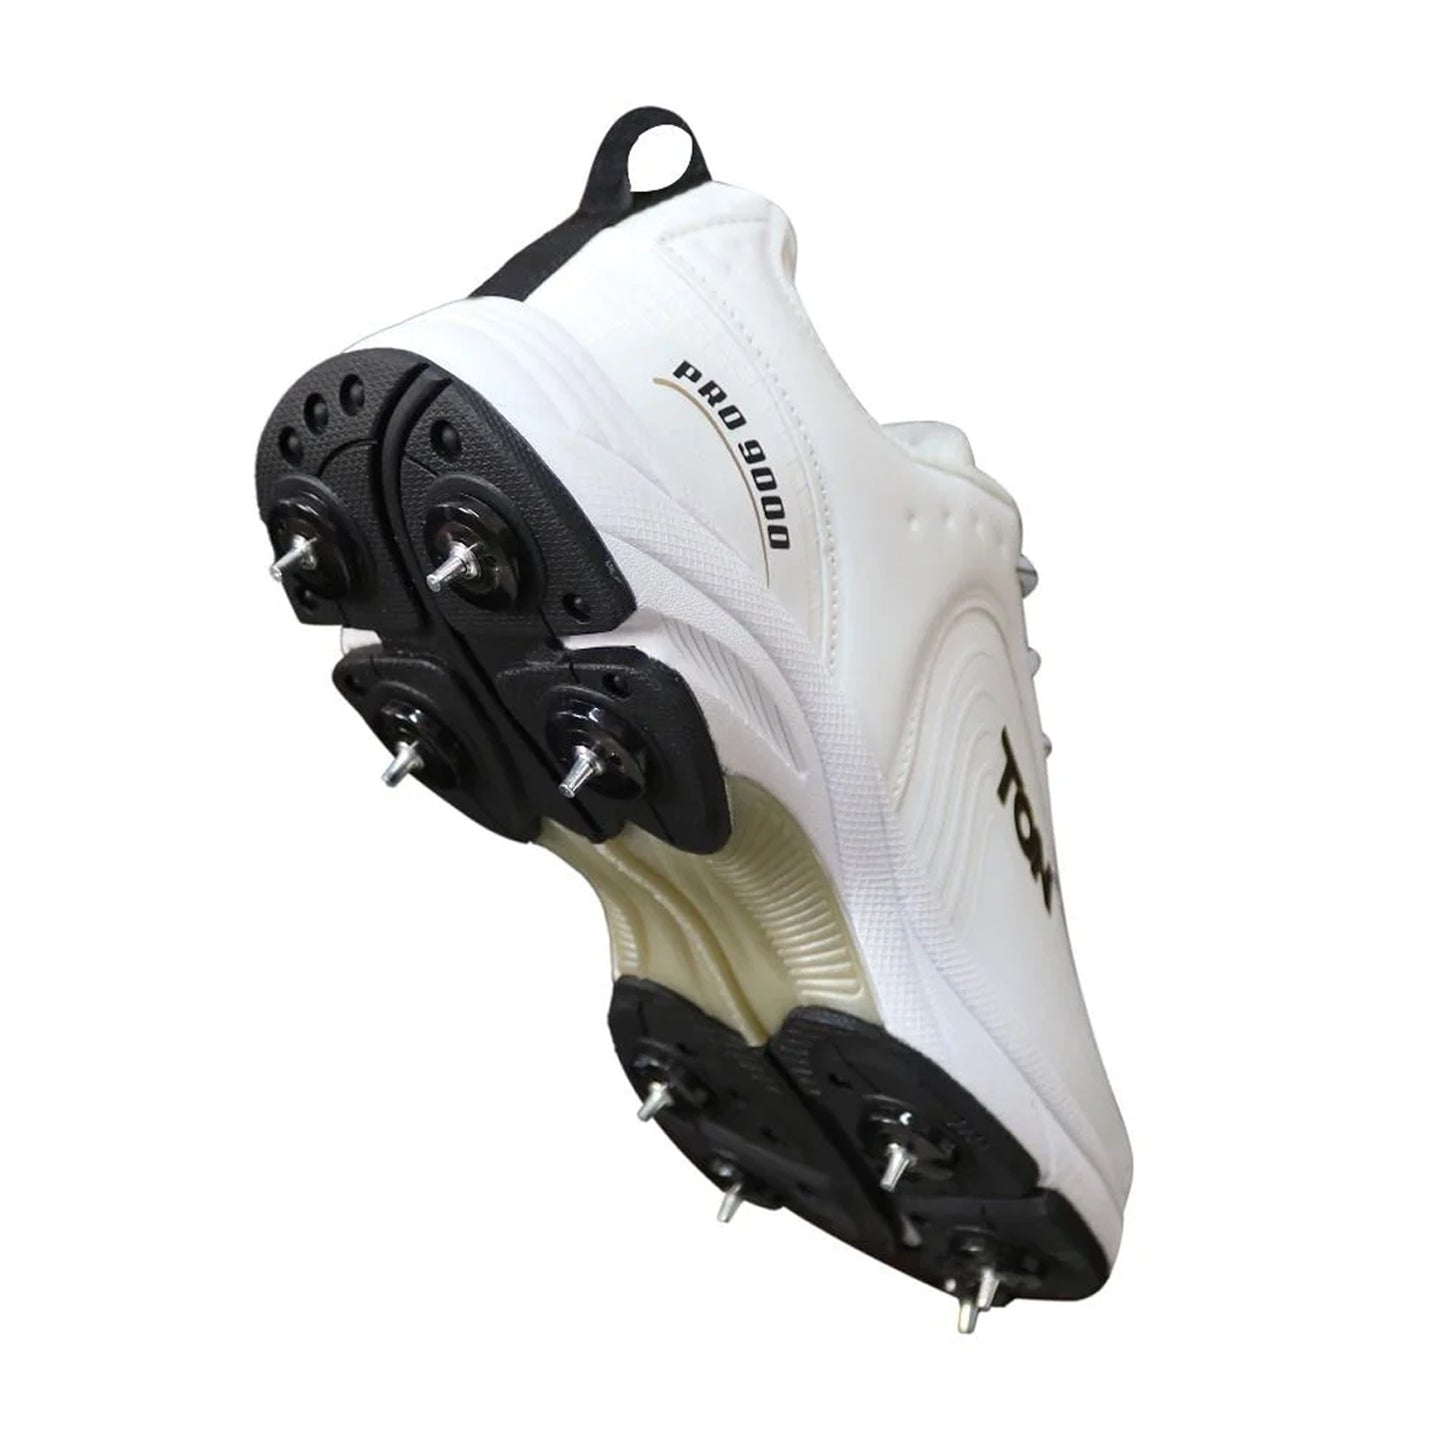 SS Ton Pro 9000 Cricket Spike Shoes, White/Black - Best Price online Prokicksports.com